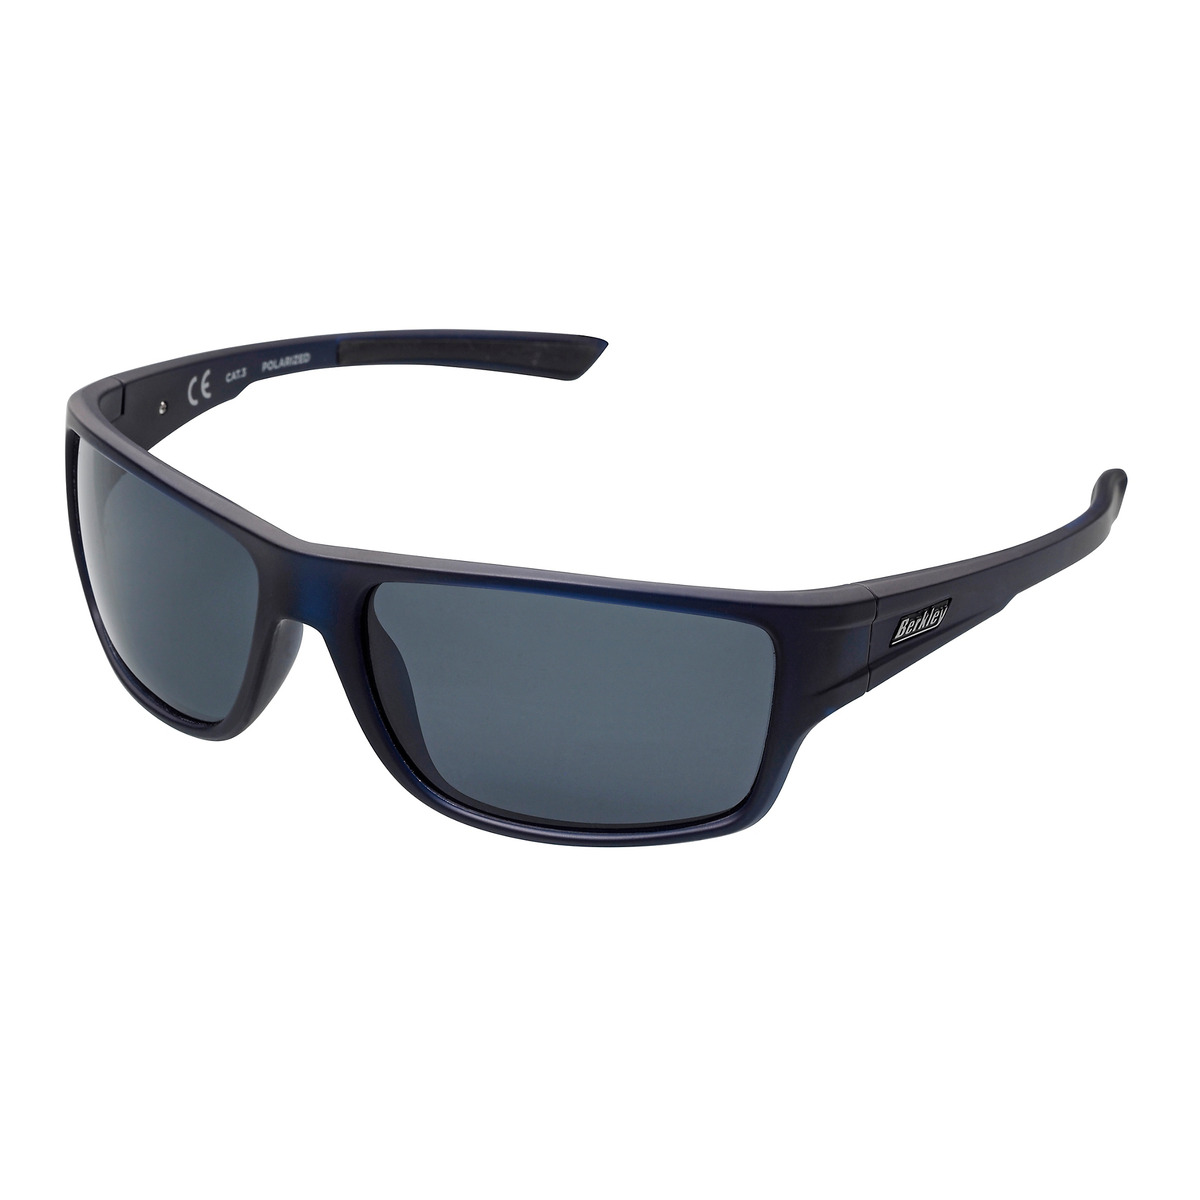 Berkley B11 Sunglasses - Black/Gray